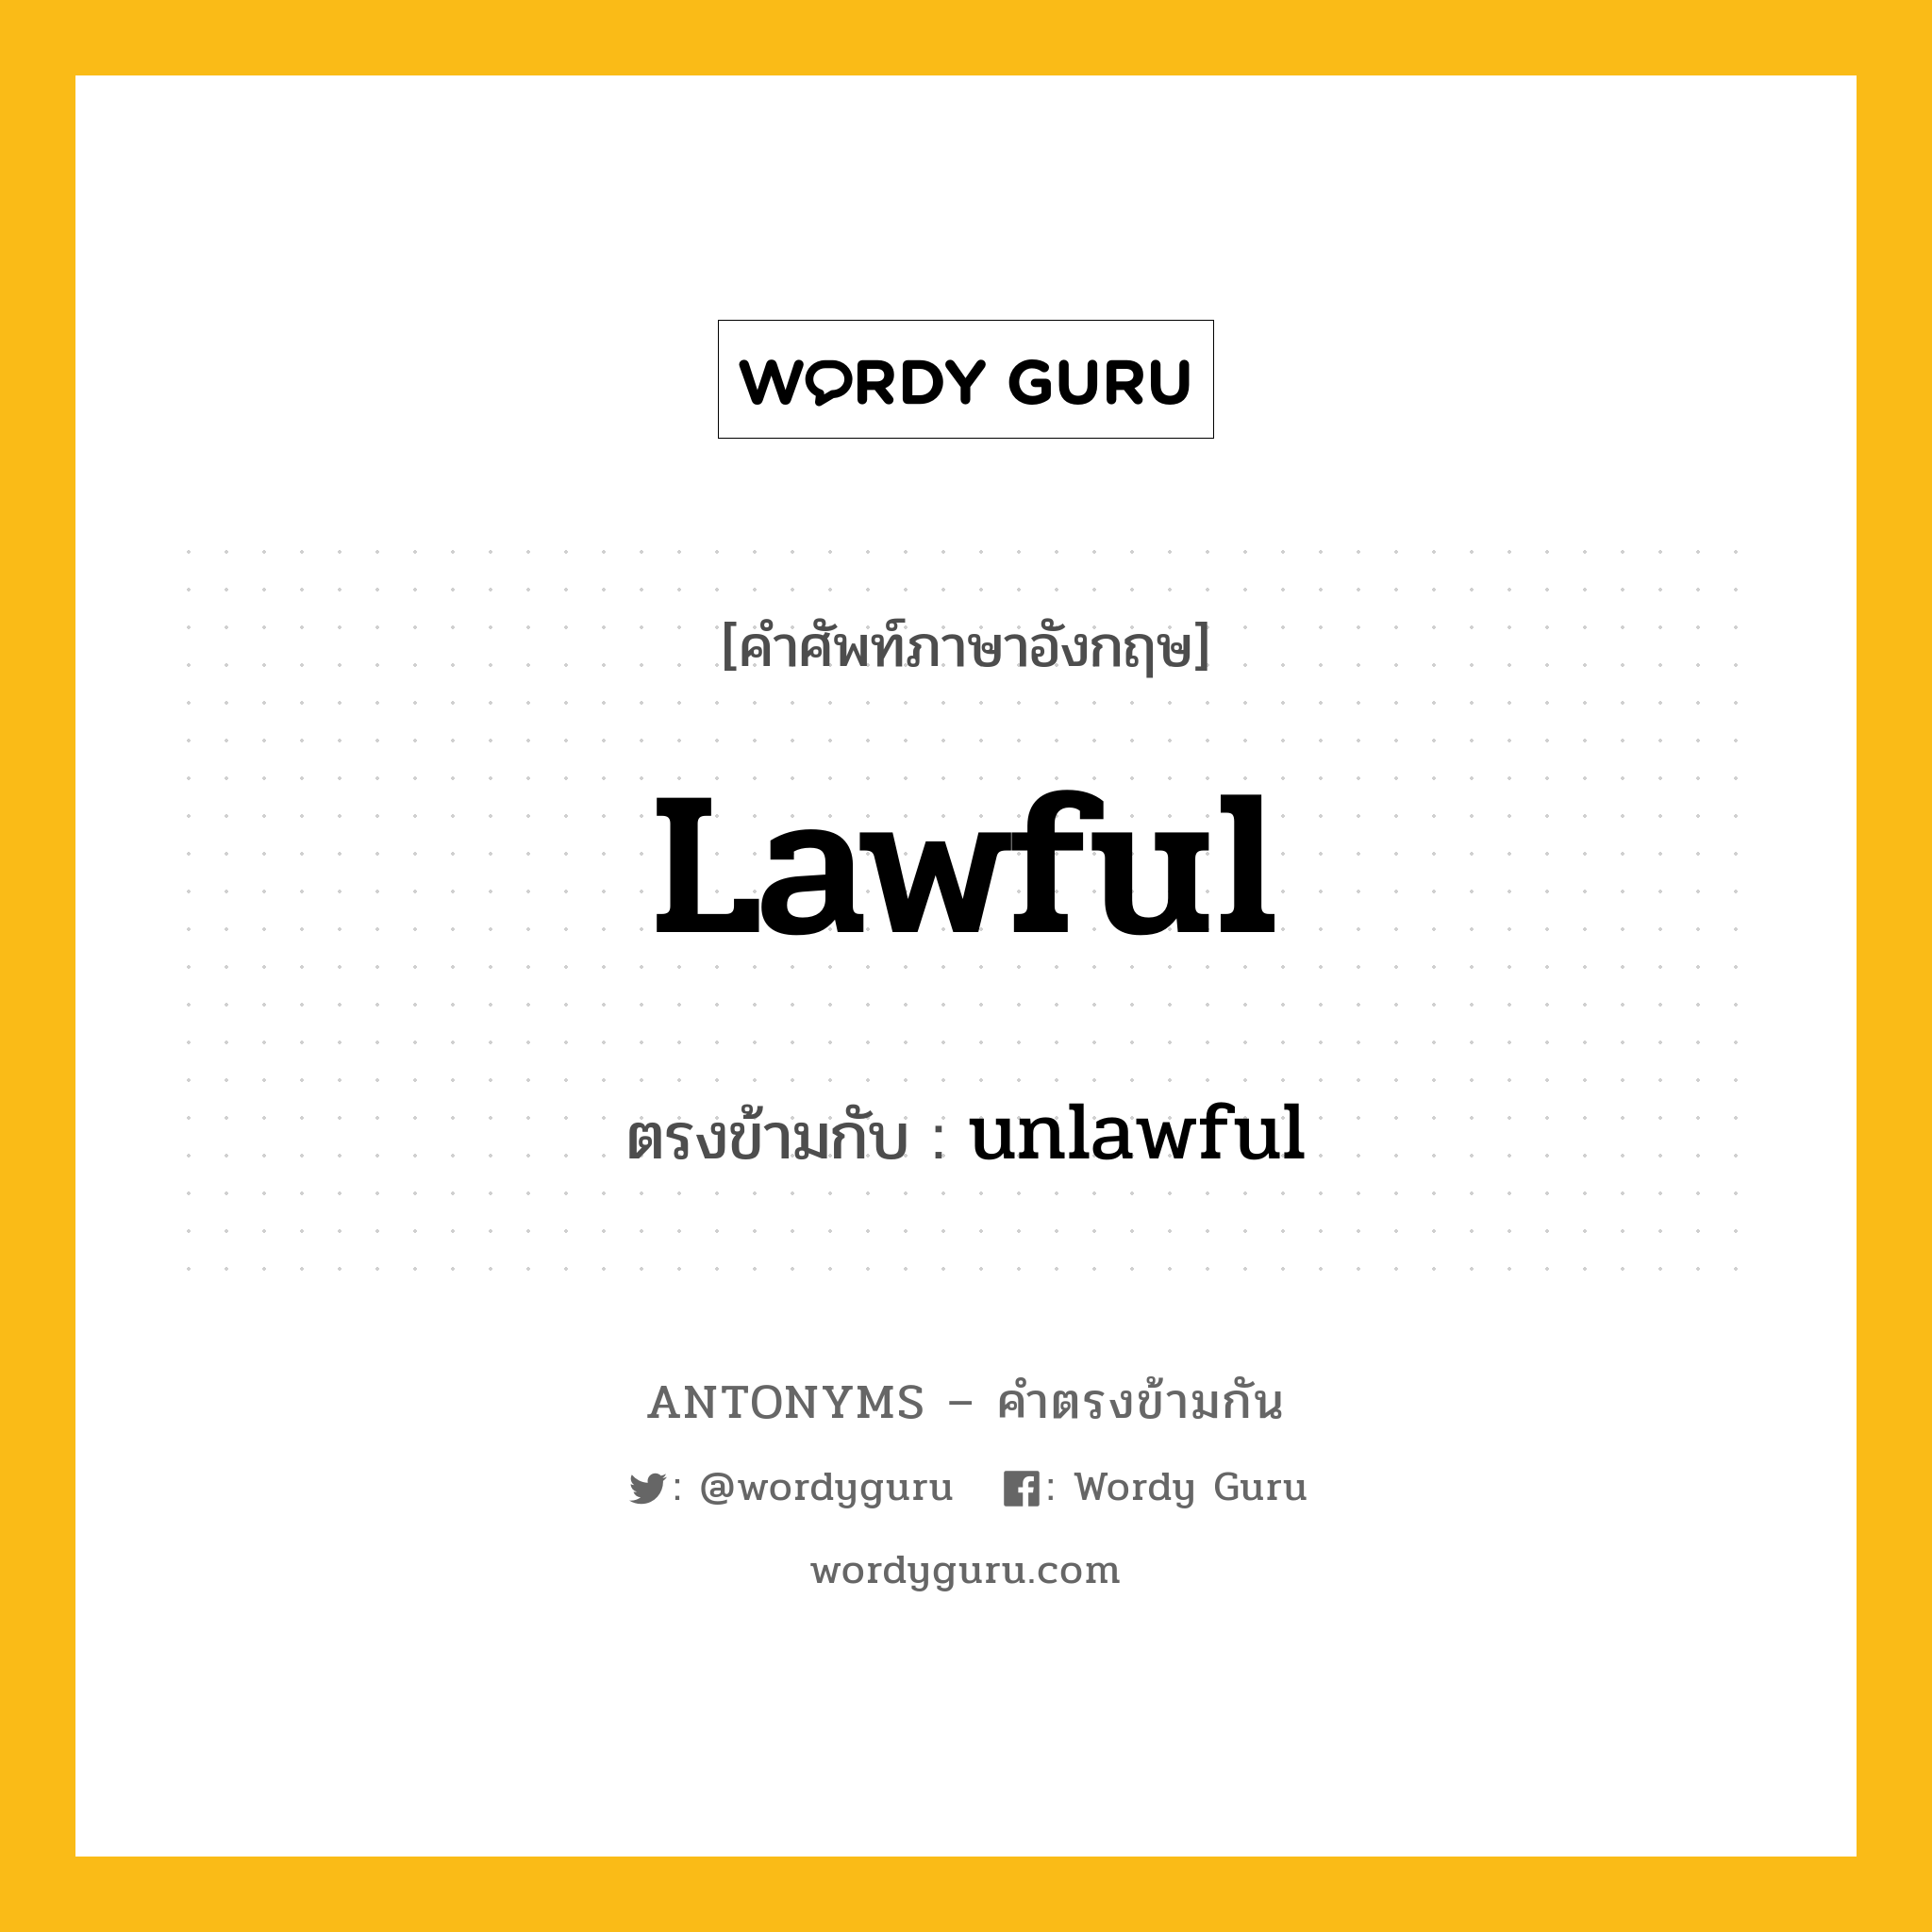 lawful เป็นคำตรงข้ามกับคำไหนบ้าง?, คำศัพท์ภาษาอังกฤษ lawful ตรงข้ามกับ unlawful หมวด unlawful